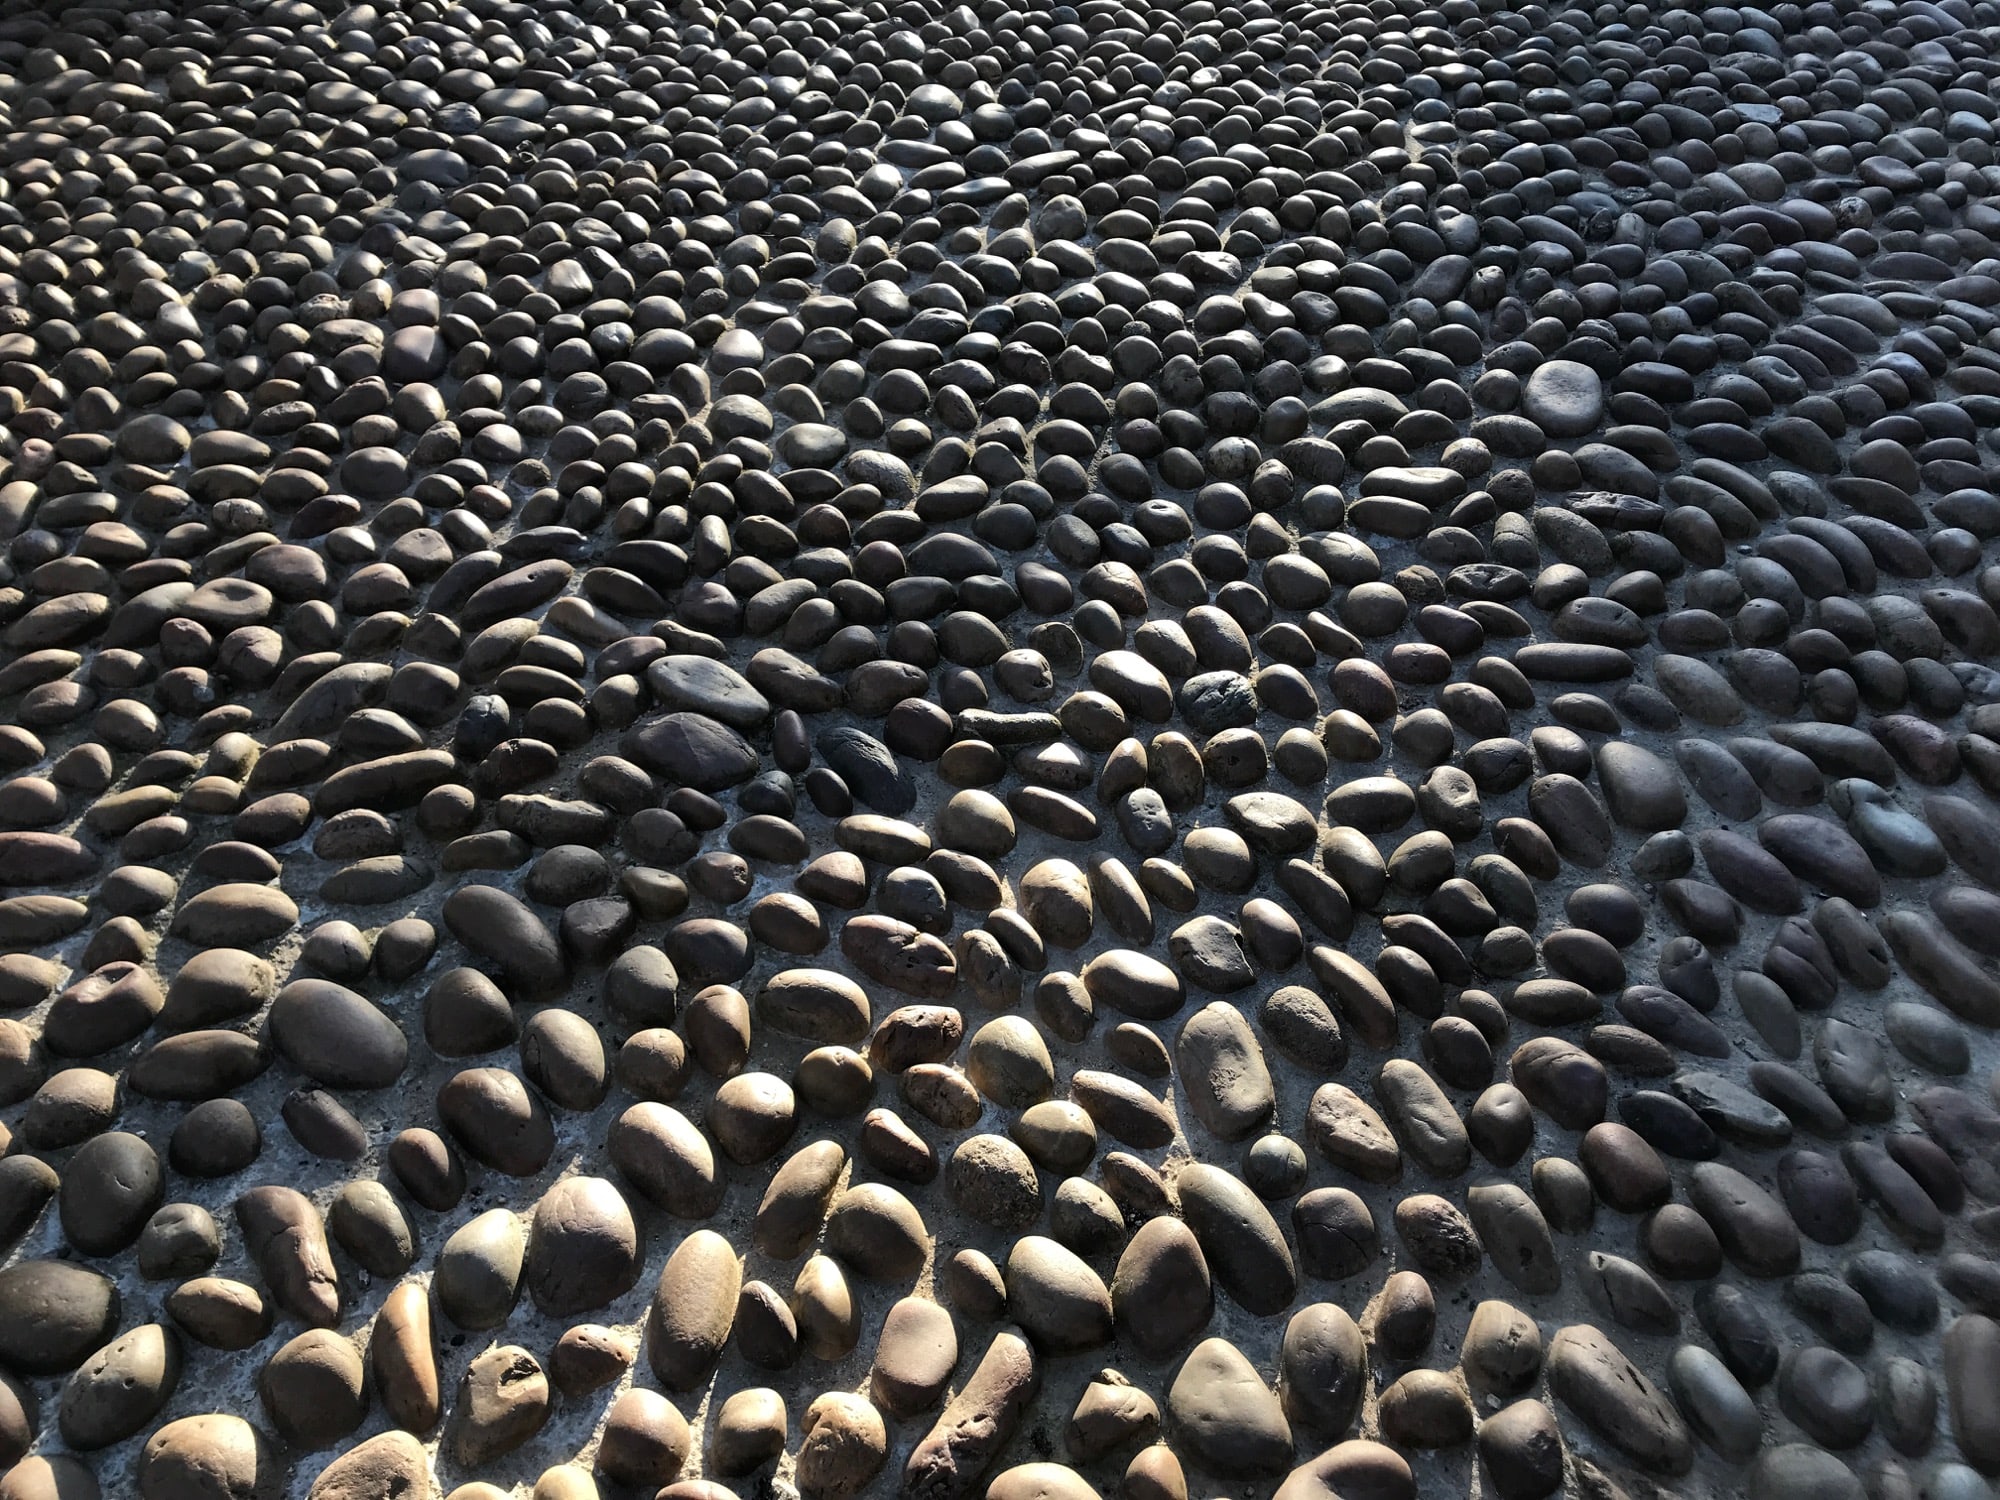 Cobble stones in Radcliffe Square, Oxford